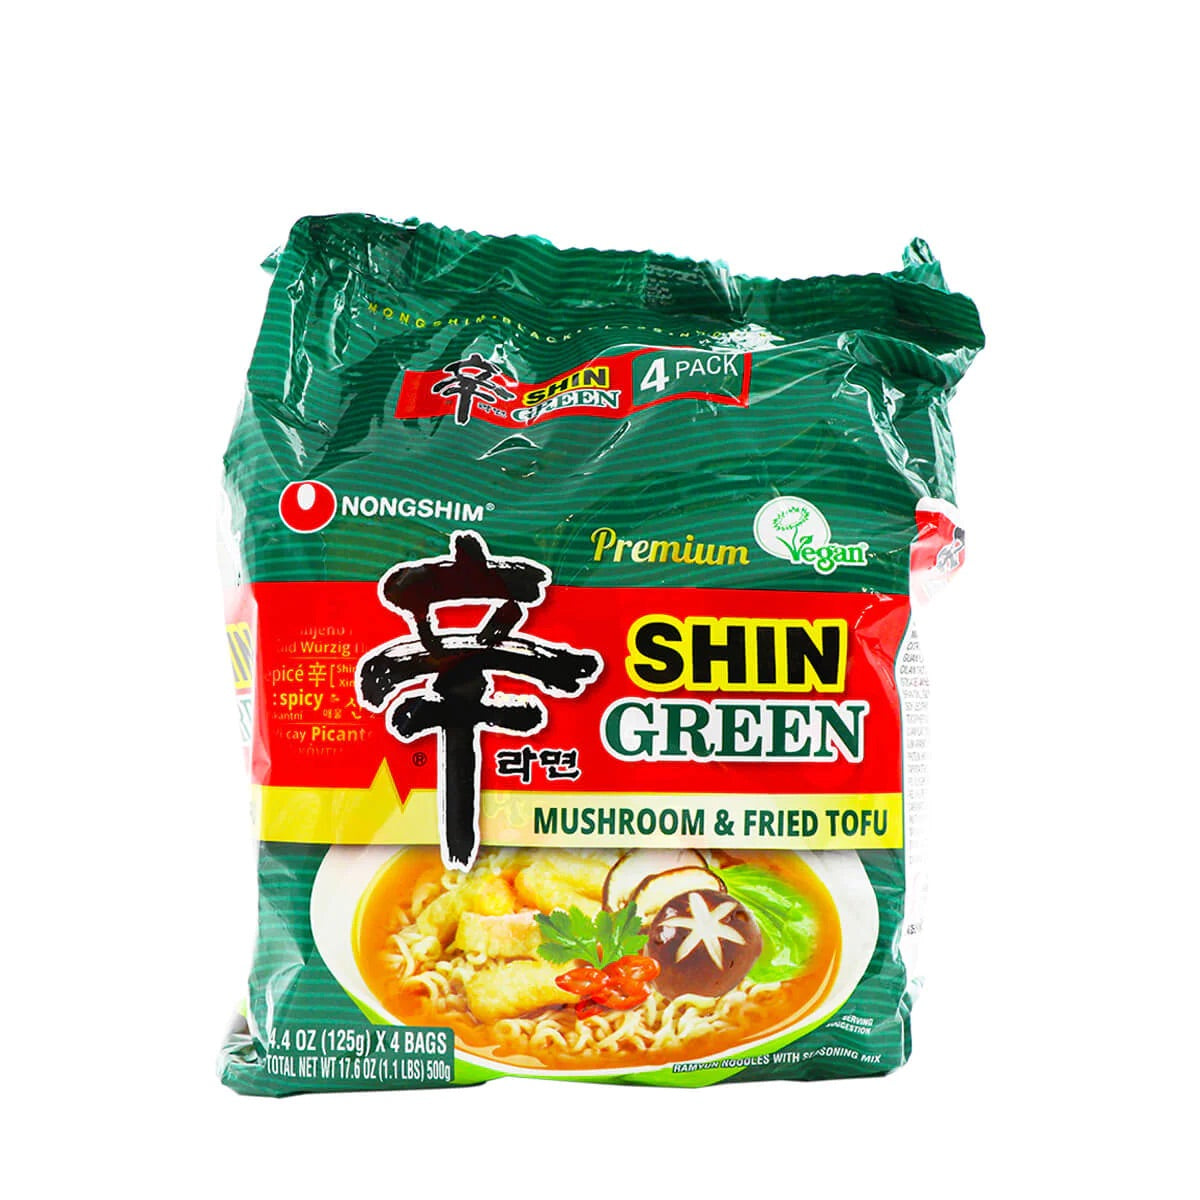 Nongshim - Shin Green Mushroom and Fried Tofu (4 pack)